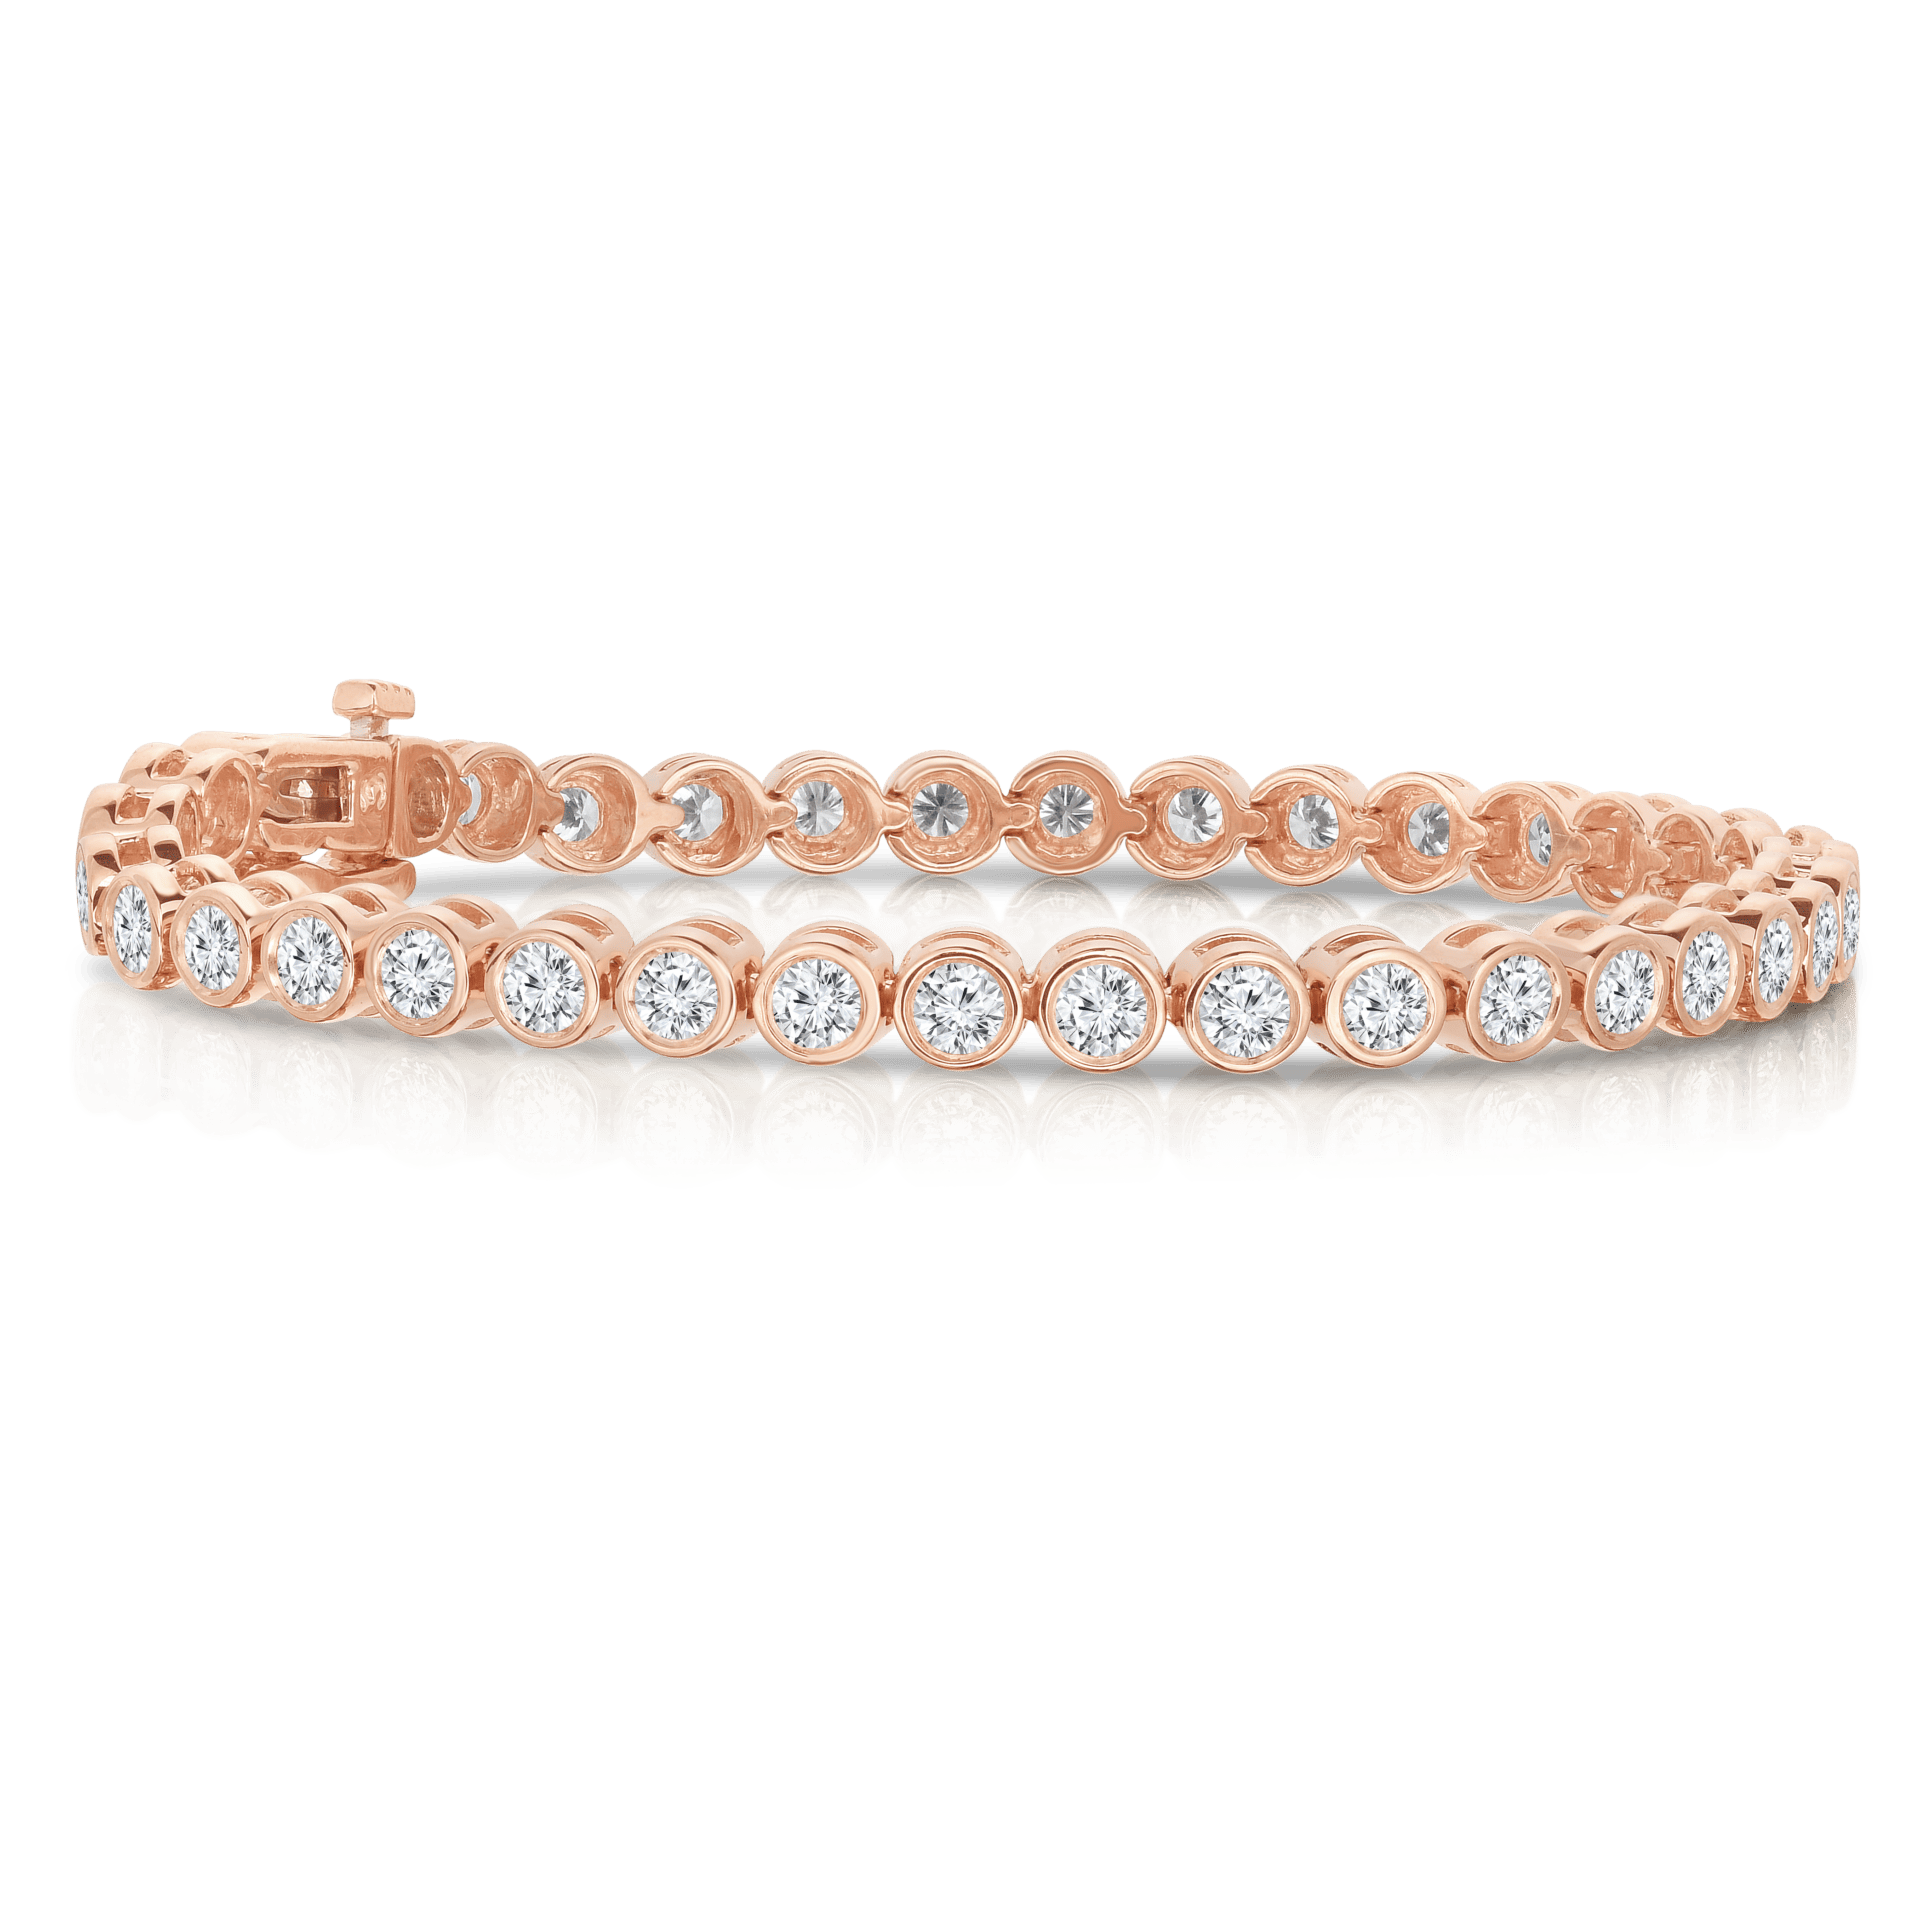 7 Carat Pear Cut Diamond Tennis Bracelet In 18K Rose Gold | Fascinating  Diamonds